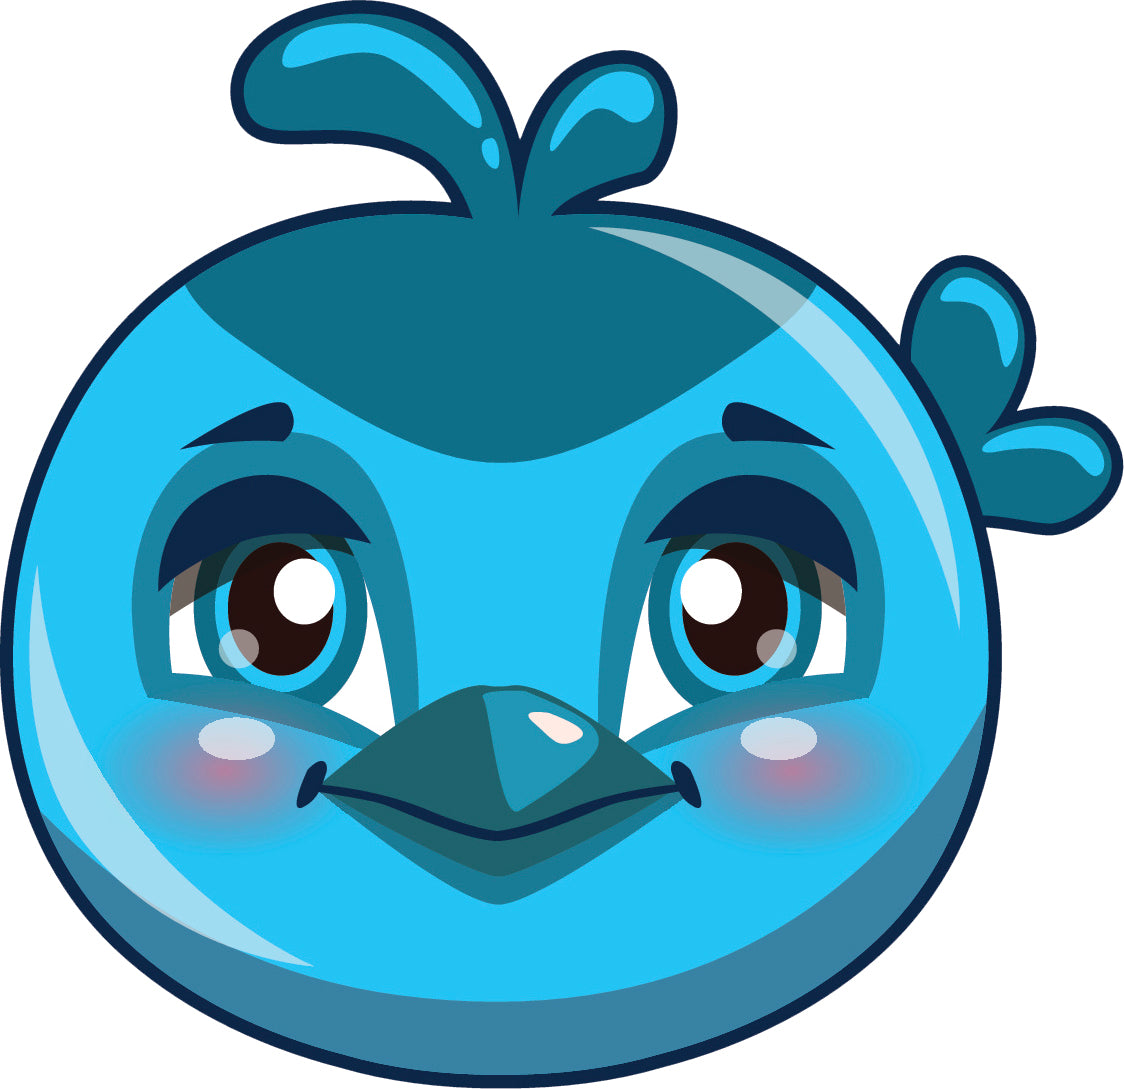 Cute Baby Bird Chick Face Cartoon Emoji - Blue Vinyl Decal Sticker